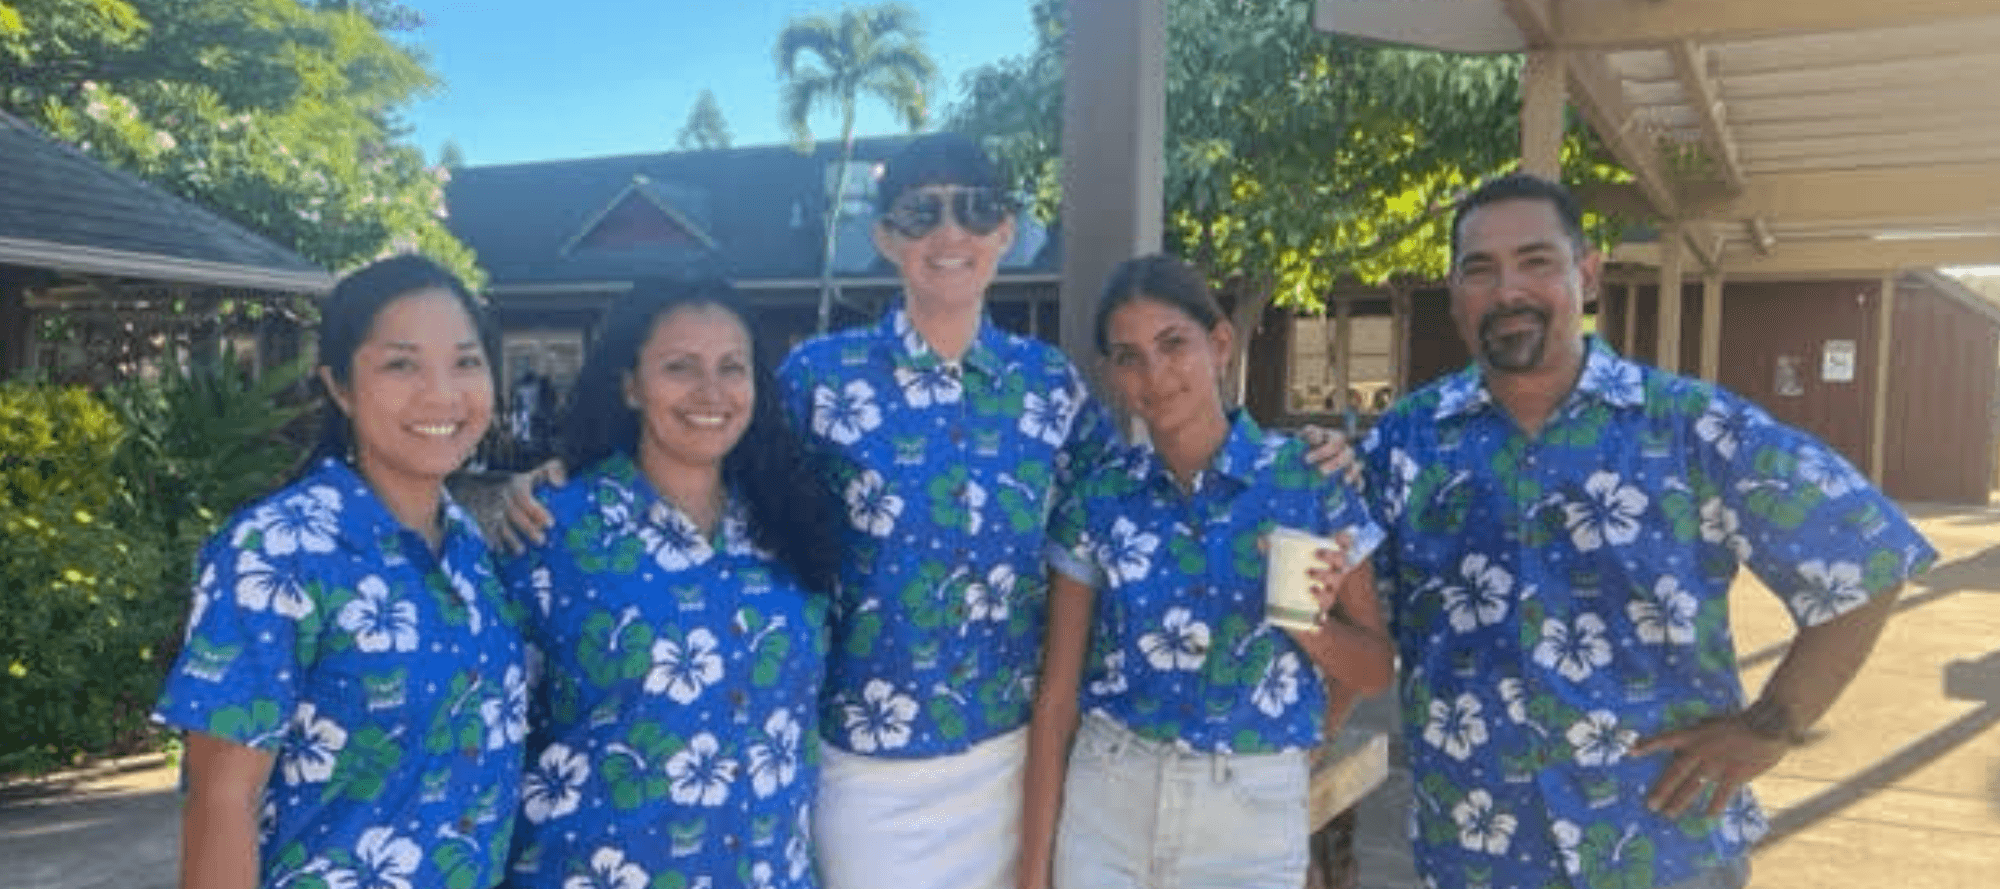 A group photo of people wearing Maui Prep Hawaiian shirts.